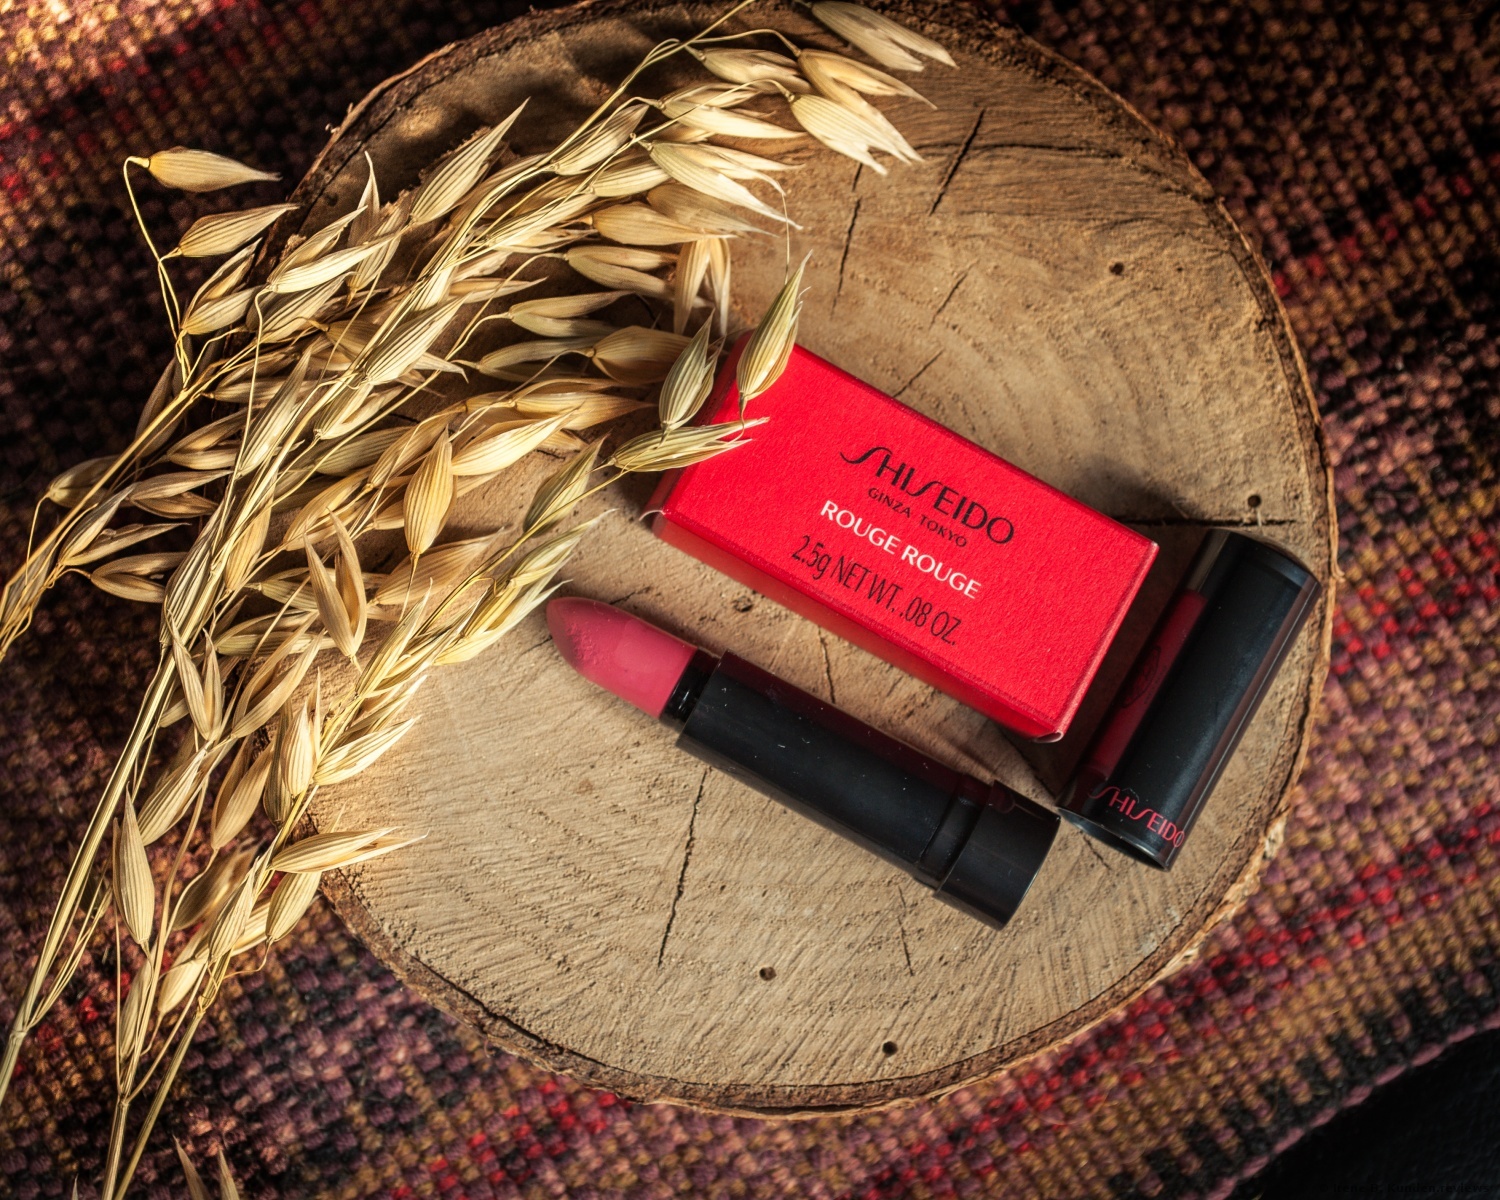 Shiseido Rouge Rouge  - Murrey